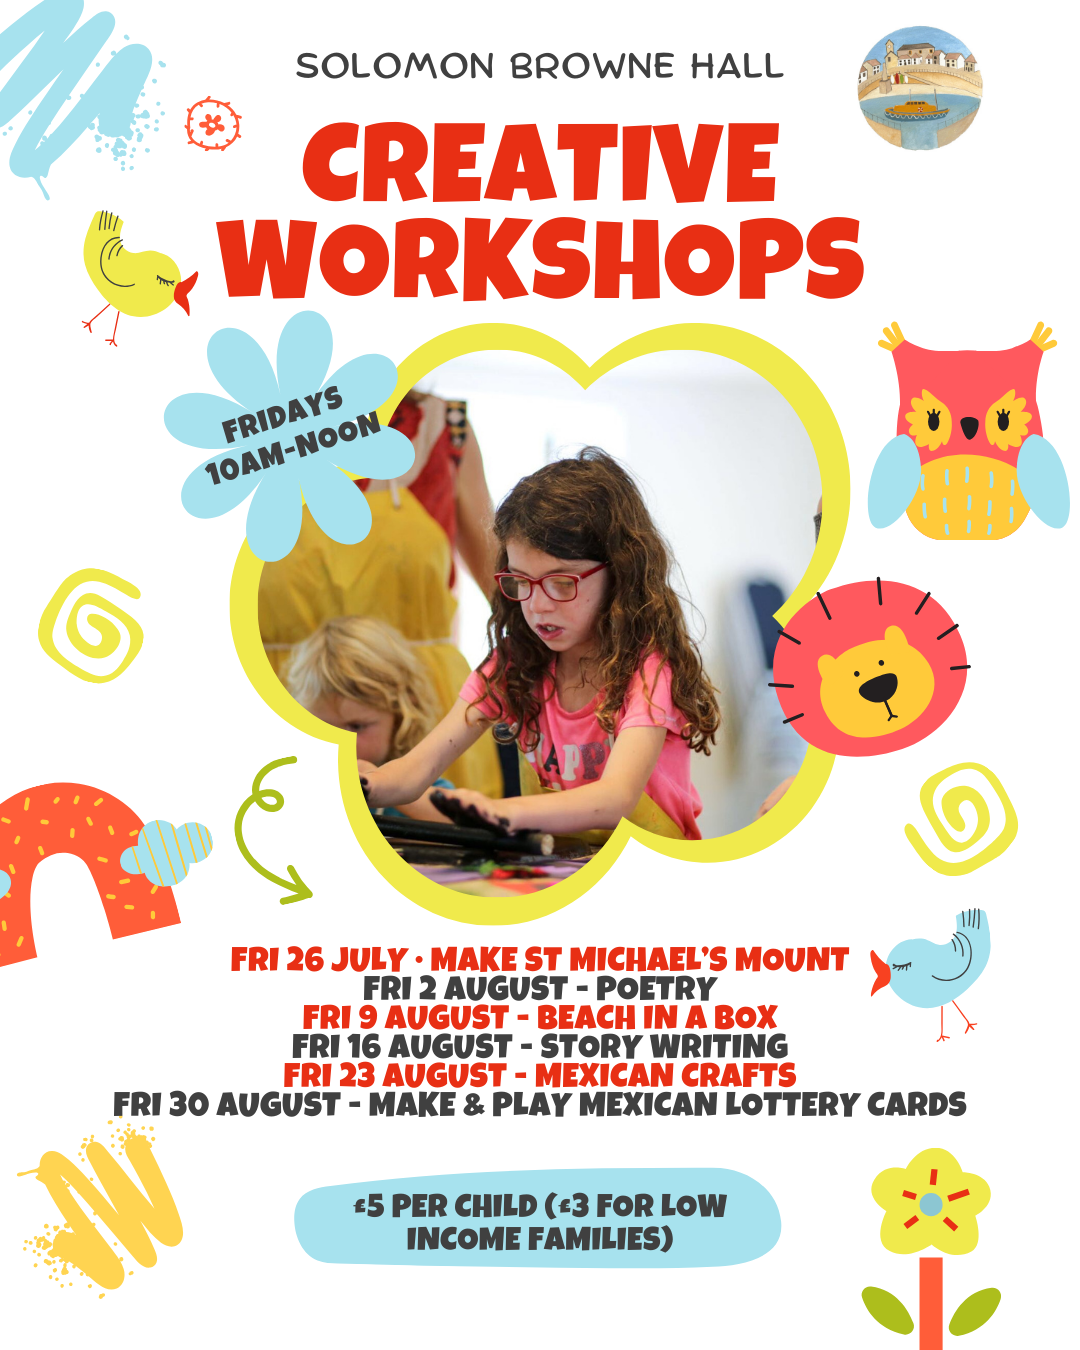 Creative family workshops - Fridays all summer